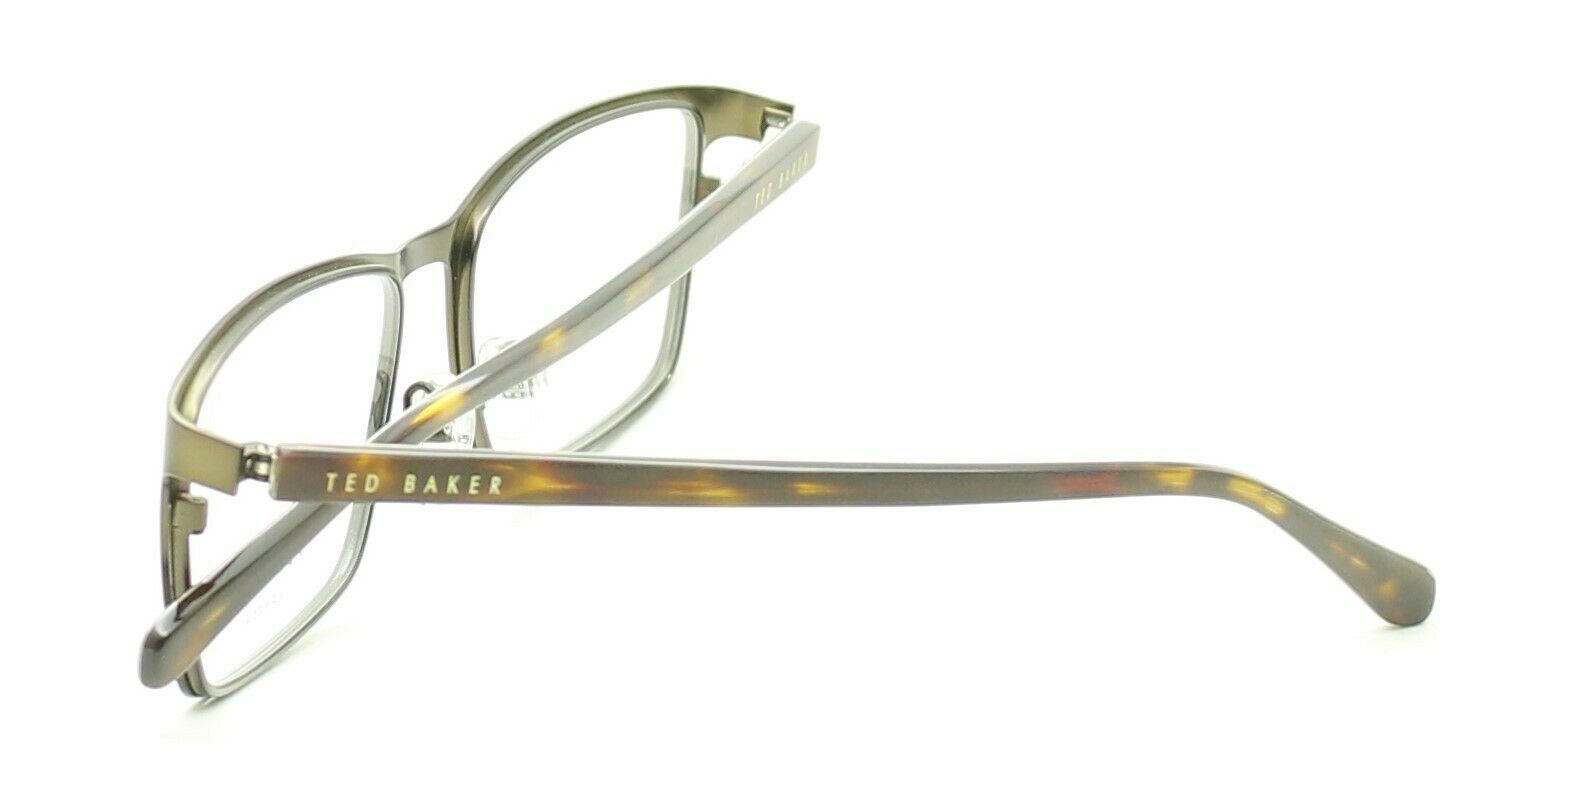 TED BAKER 4251 154 Reeve 55mm Eyewear FRAMES Glasses RX Optical Eyeglasses - New